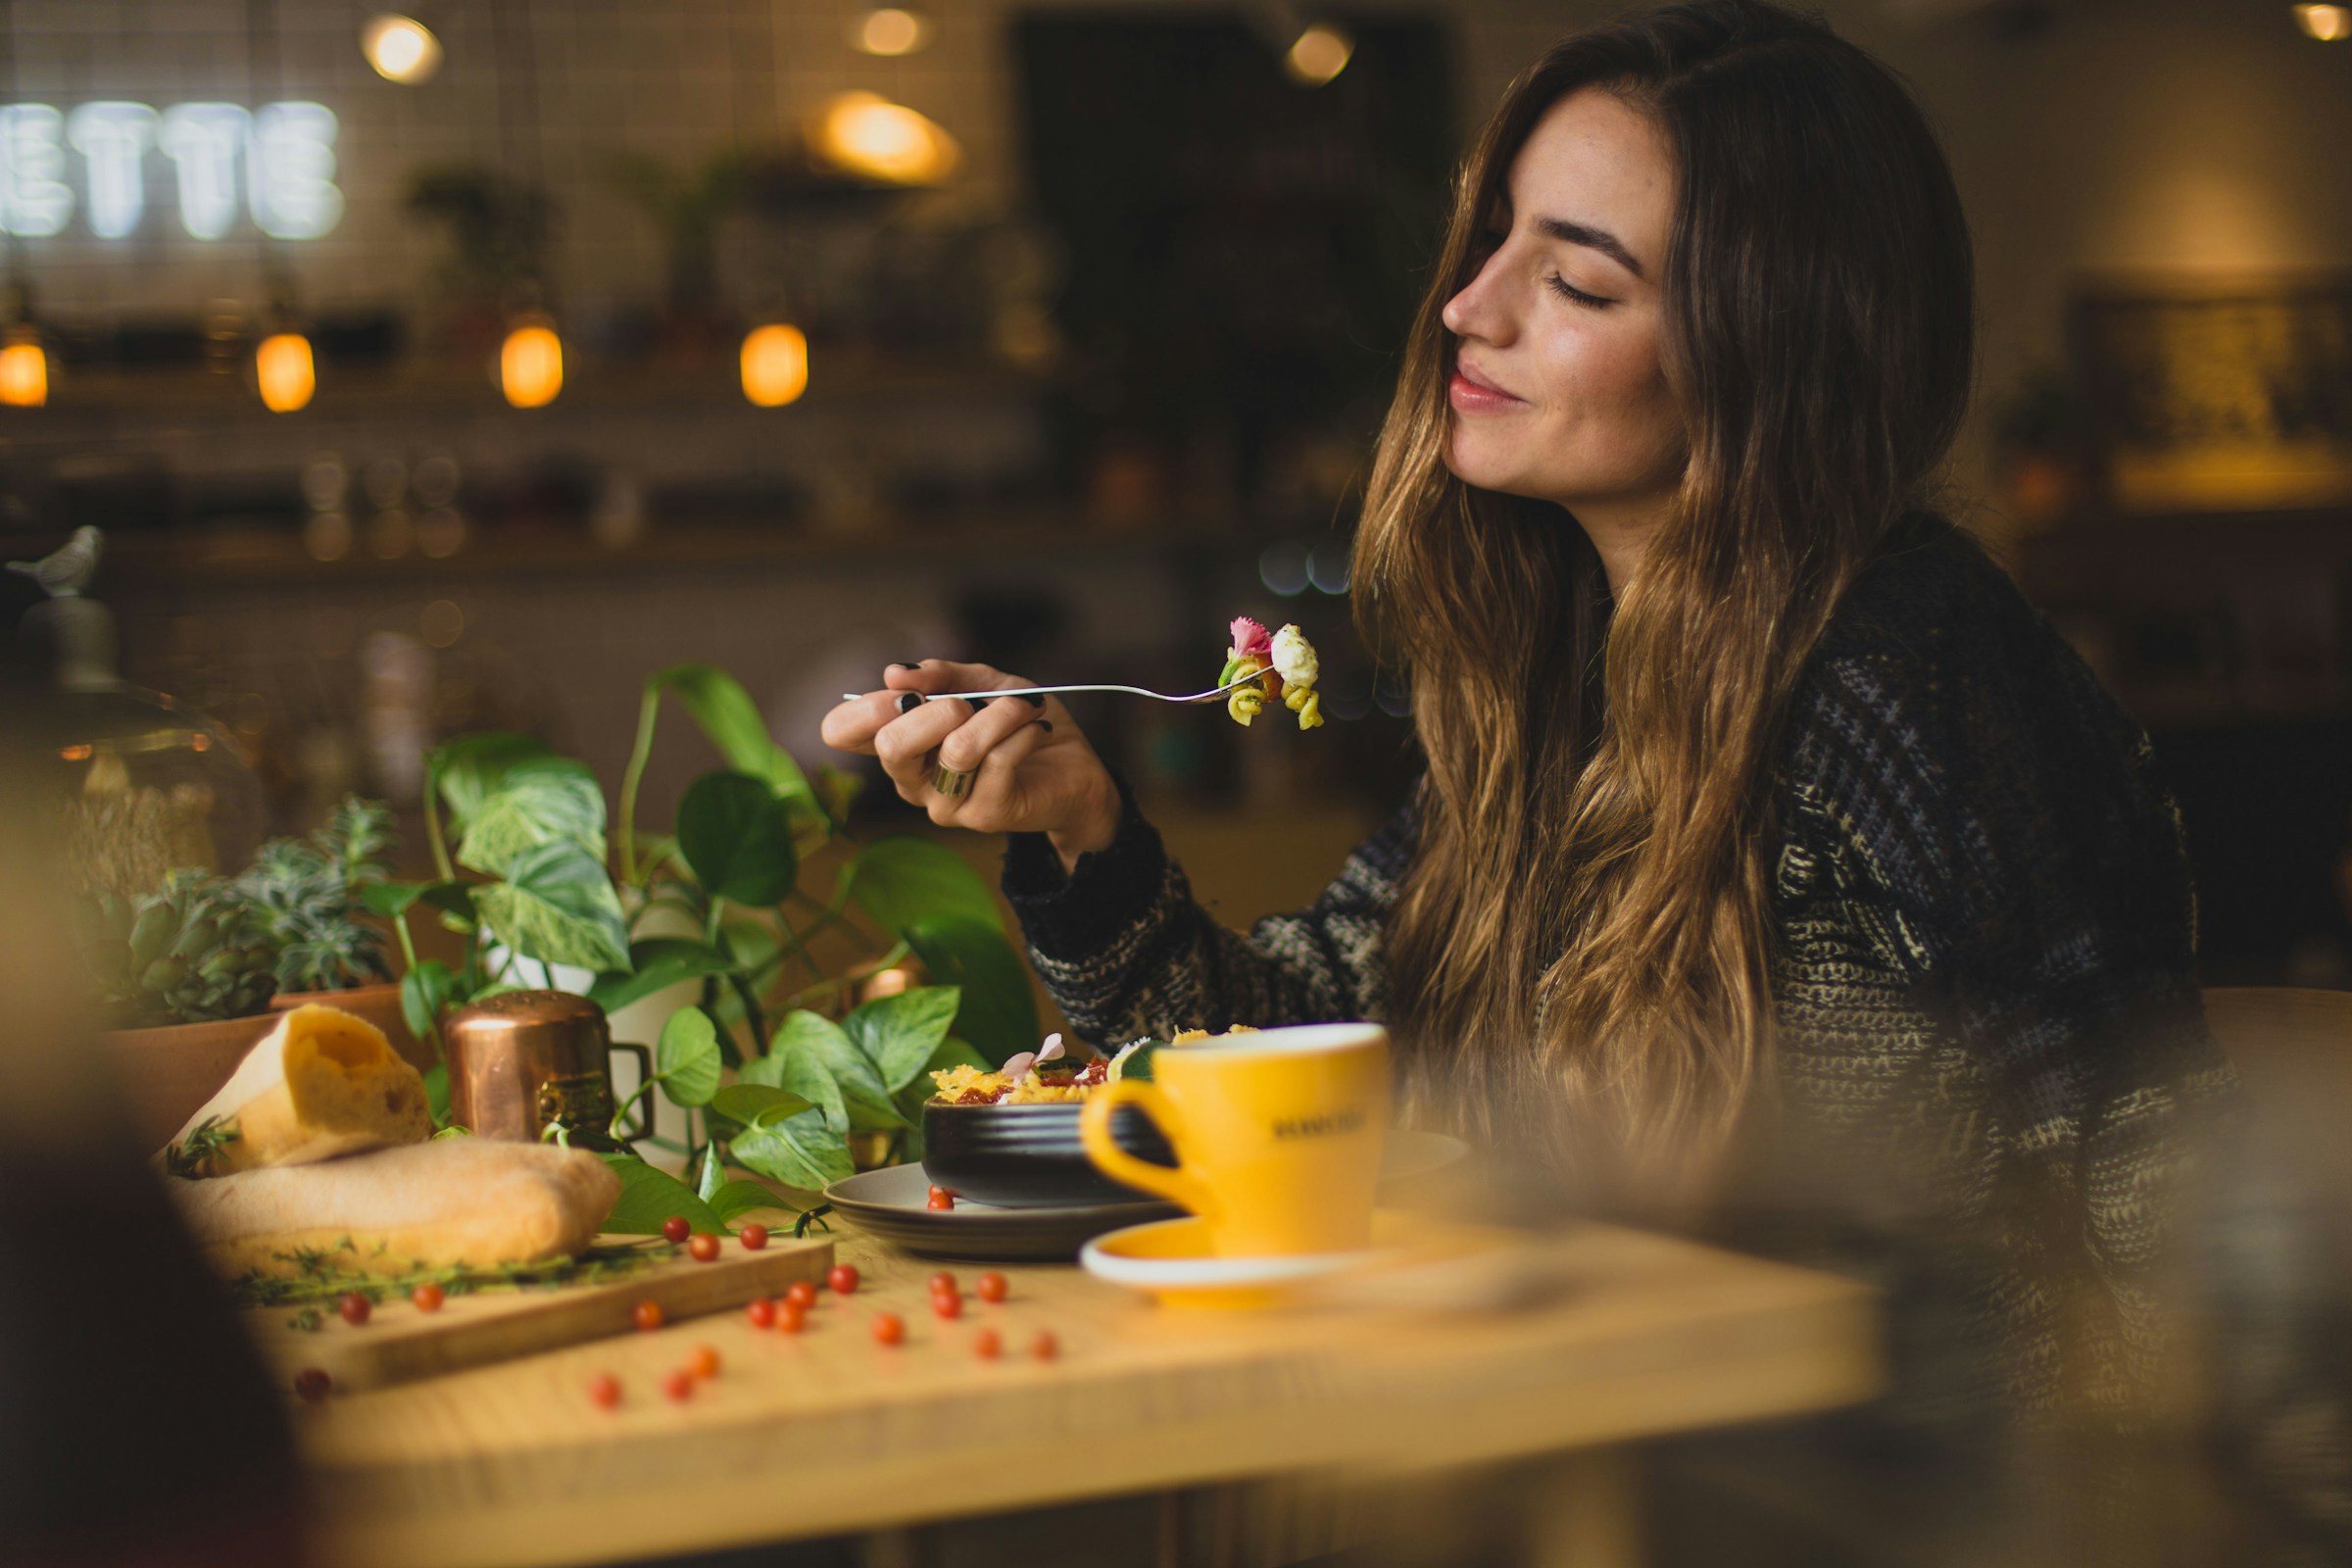 A woman enjoying dinner in a restaurant | Source: Unsplash